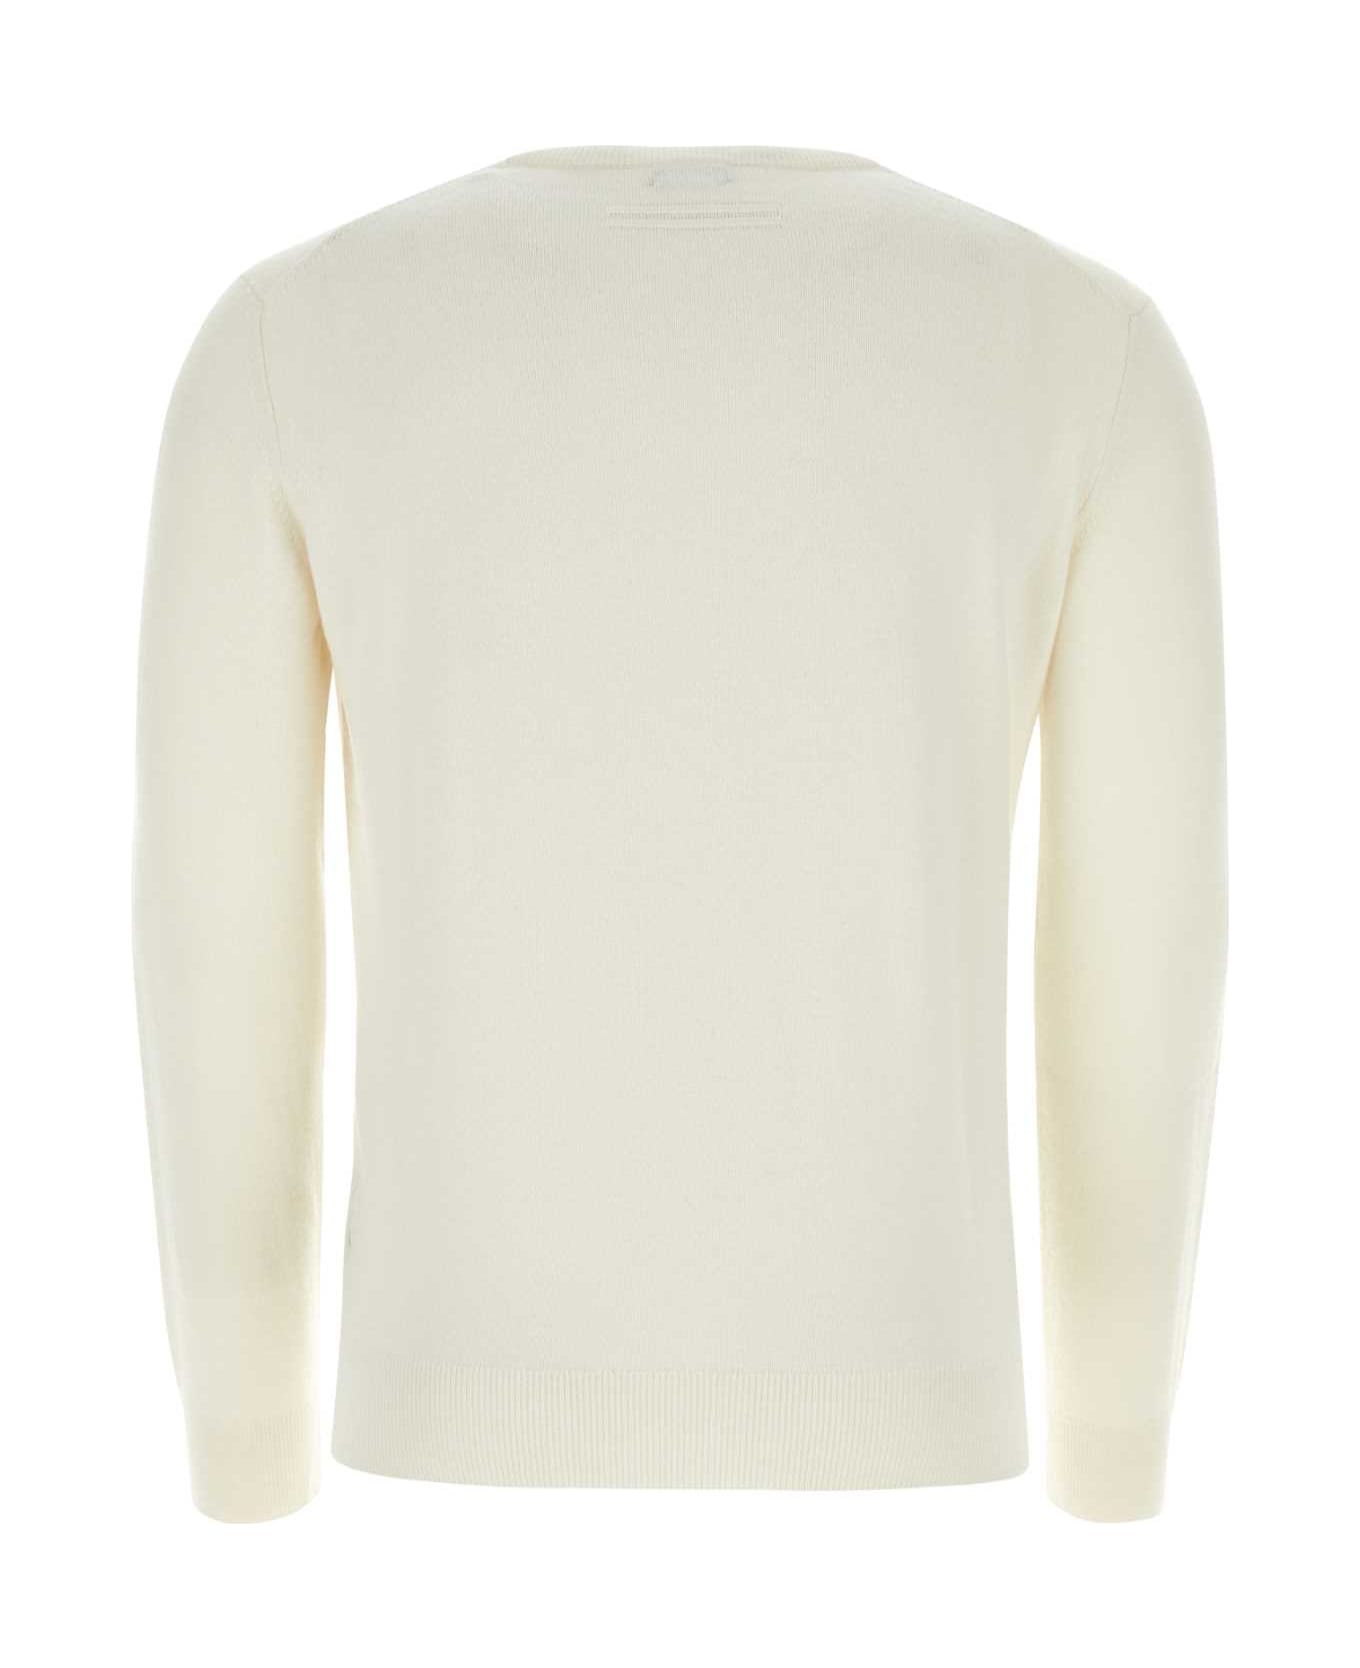 Zegna Ivory Cashmere Sweater - N91